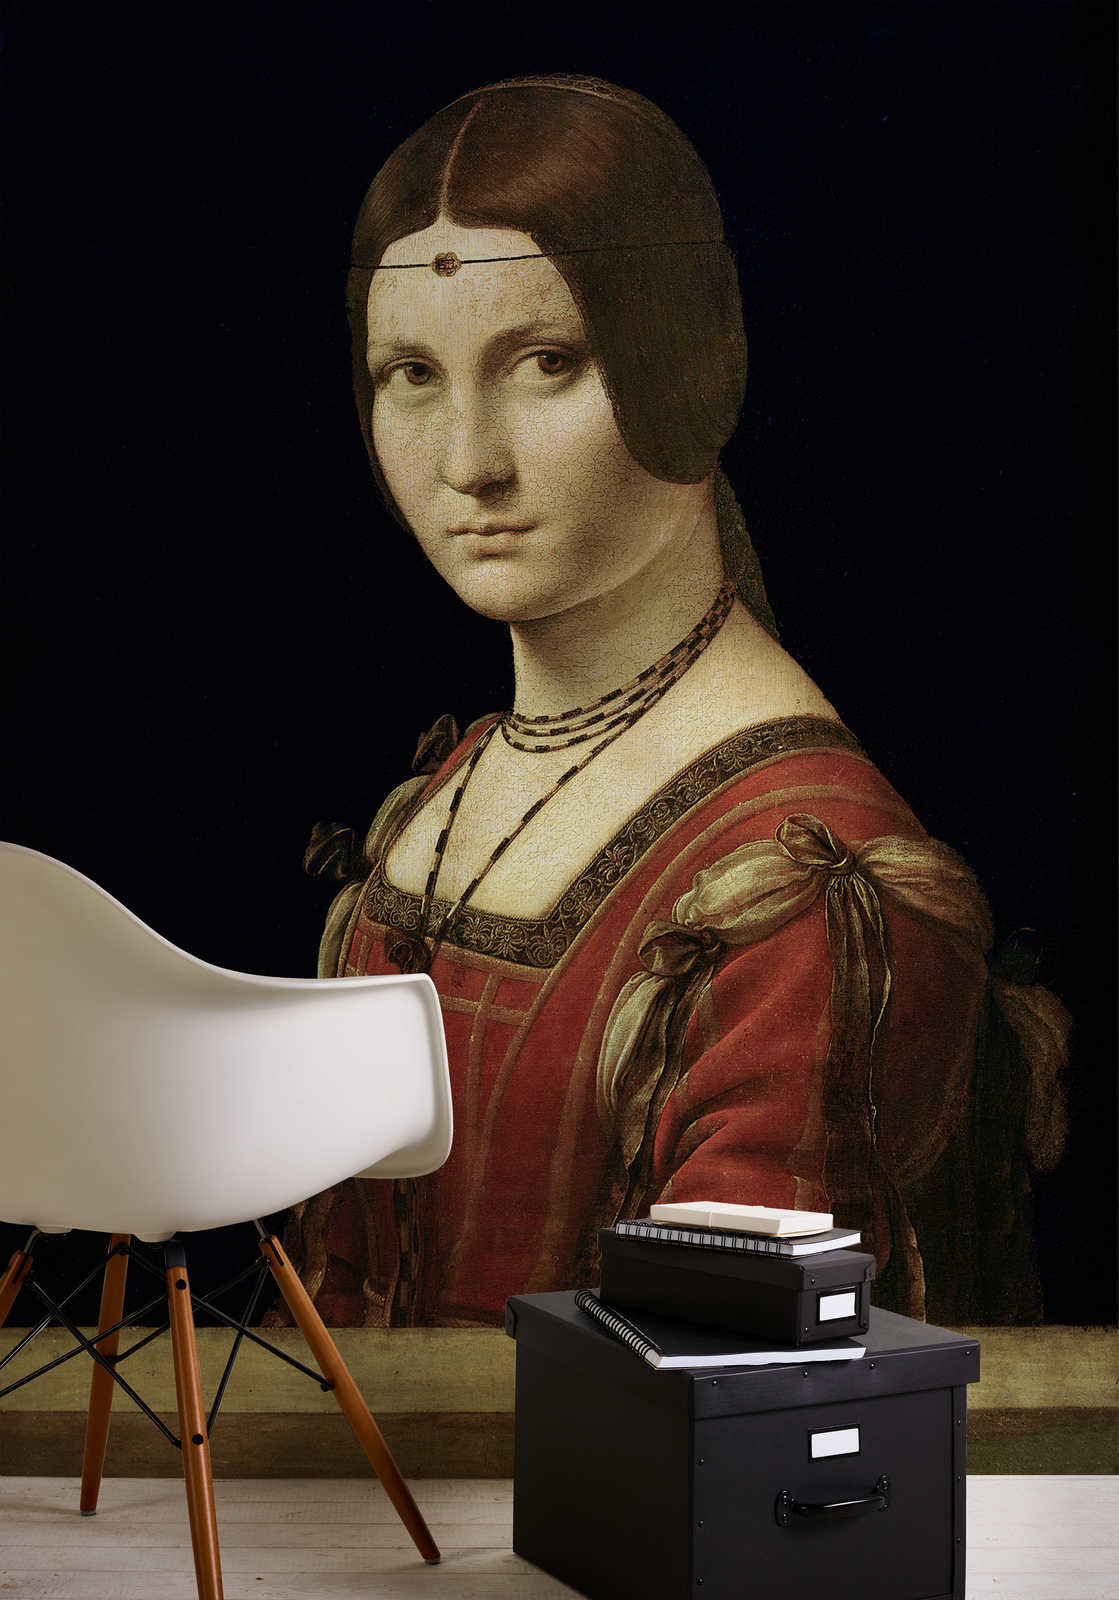             Photo wallpaper "Portrait of a Lady from the Court of Milan" by Leonardo da Vinci
        